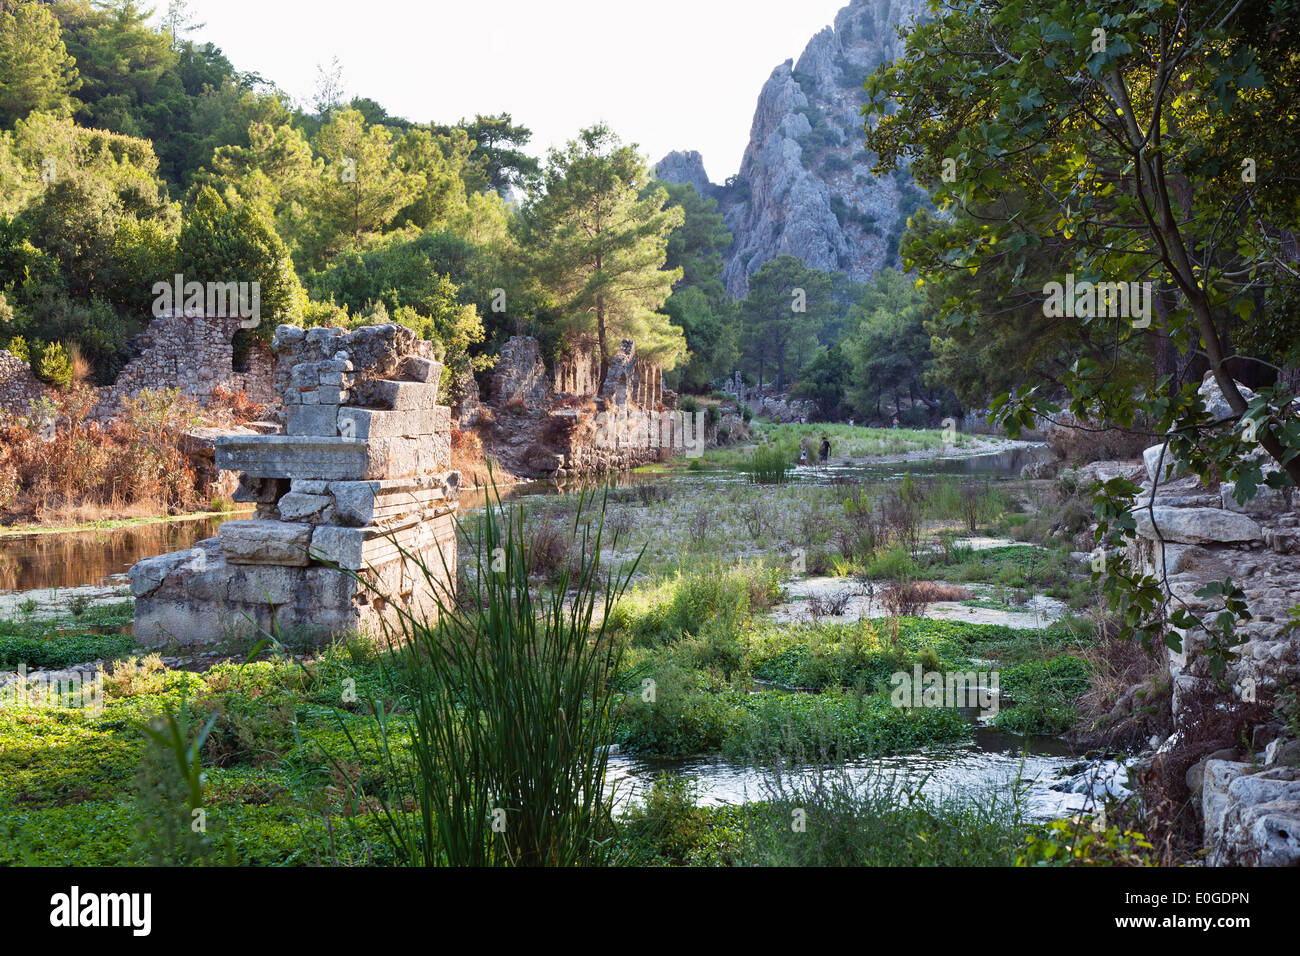 Ruins of a byzantine basilica, Ruins of ancient Olympos, lycian coast, Lycia, Mediterranean Sea, Turkey, Asia Stock Photo